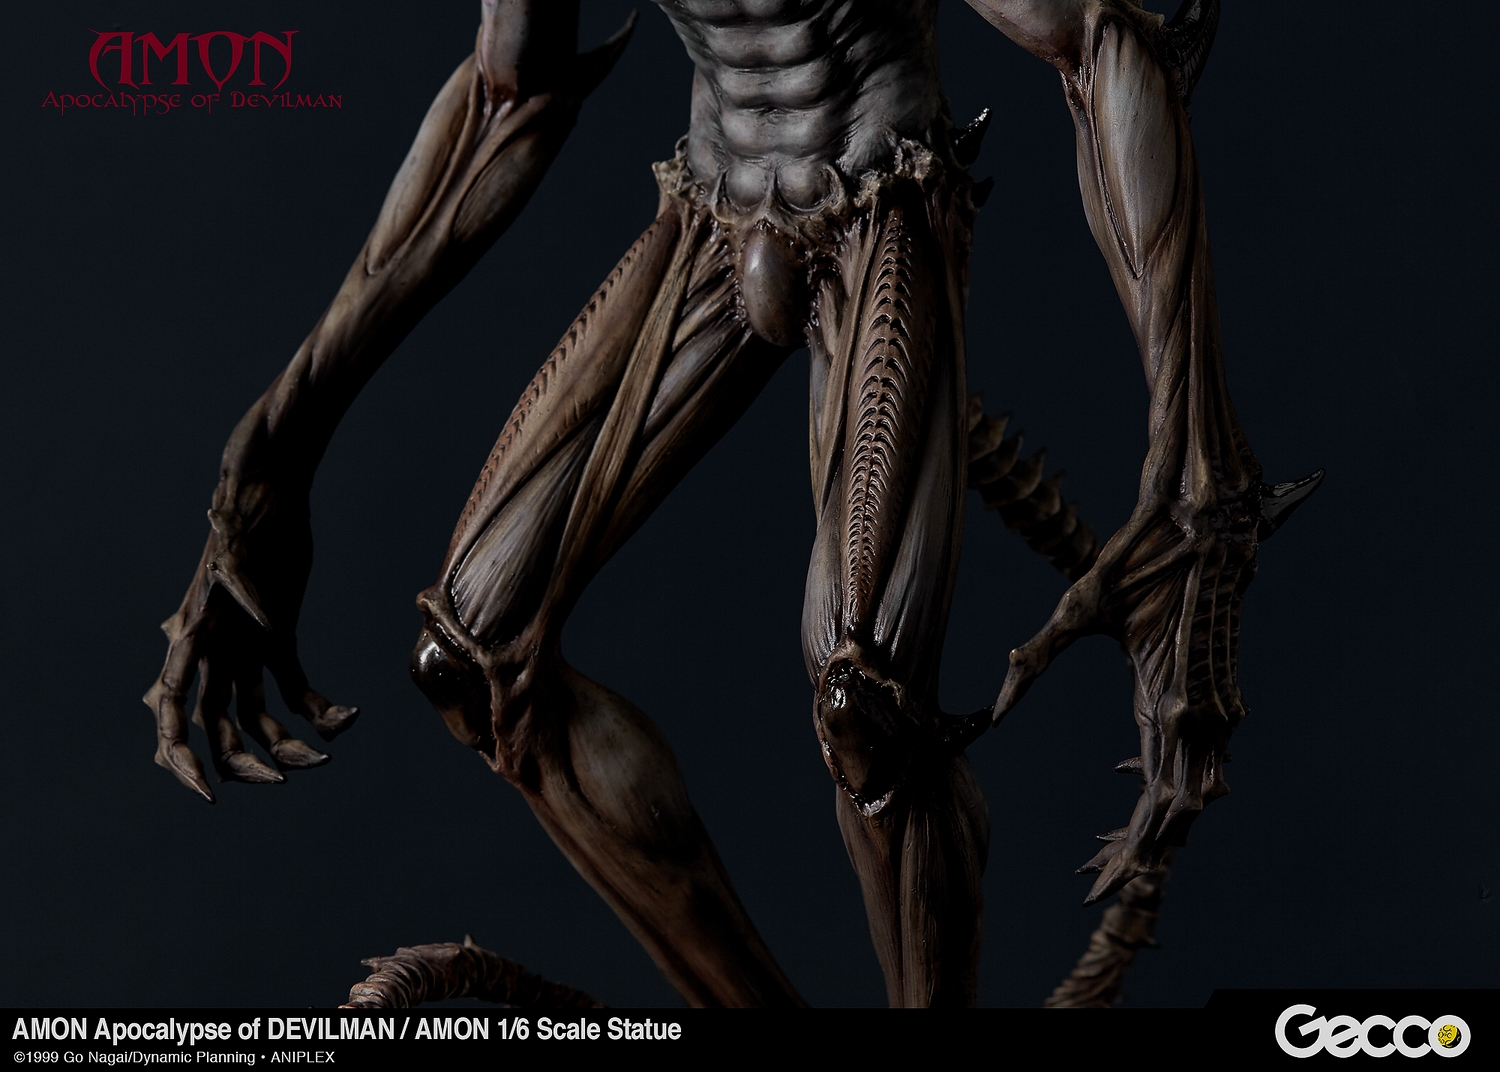 Gecco-Amon-Apocalypse-of-Devilman-Statue-020.jpg